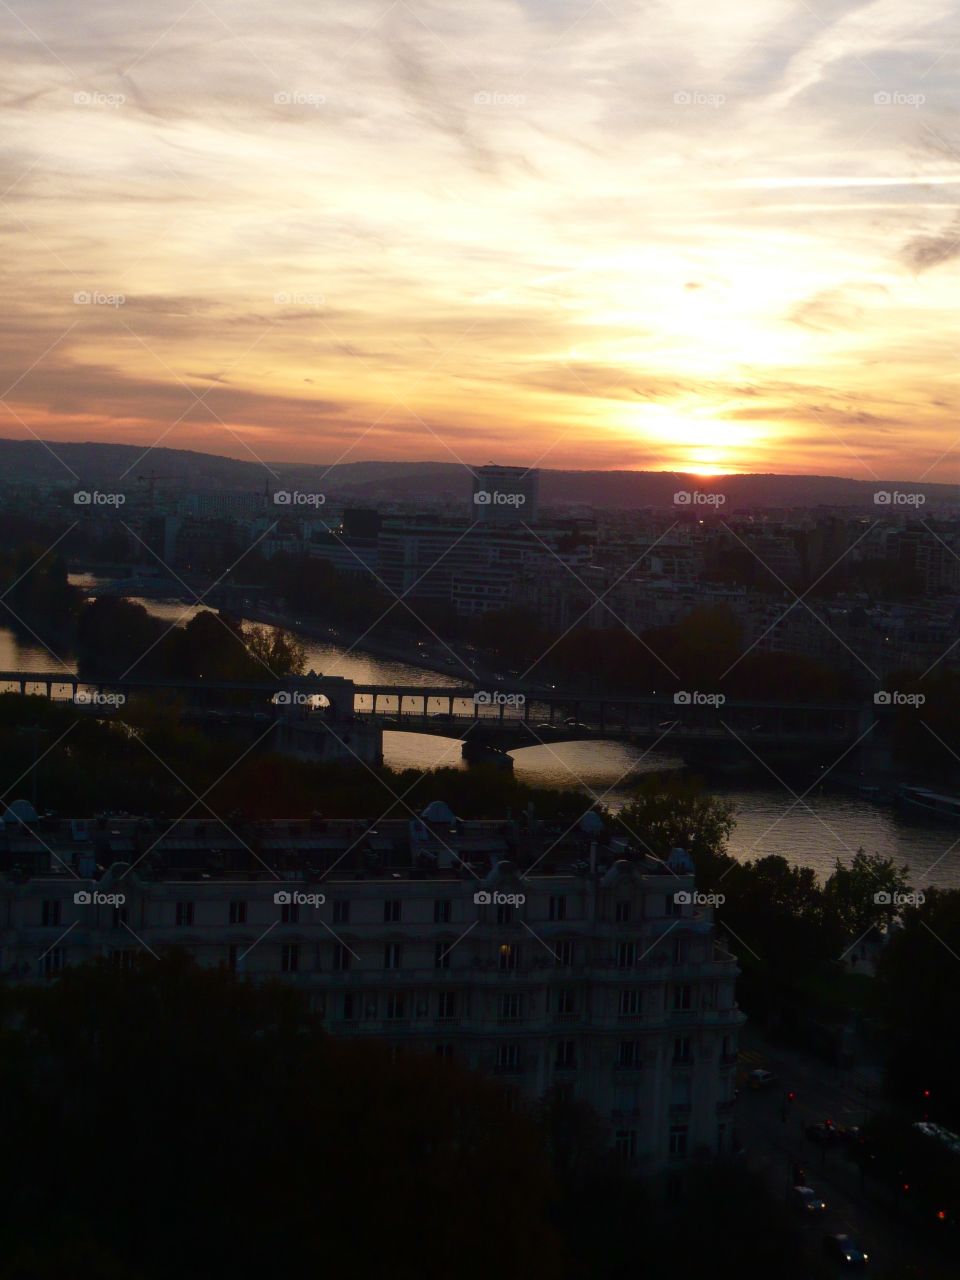 Paris by night - view on the Seine